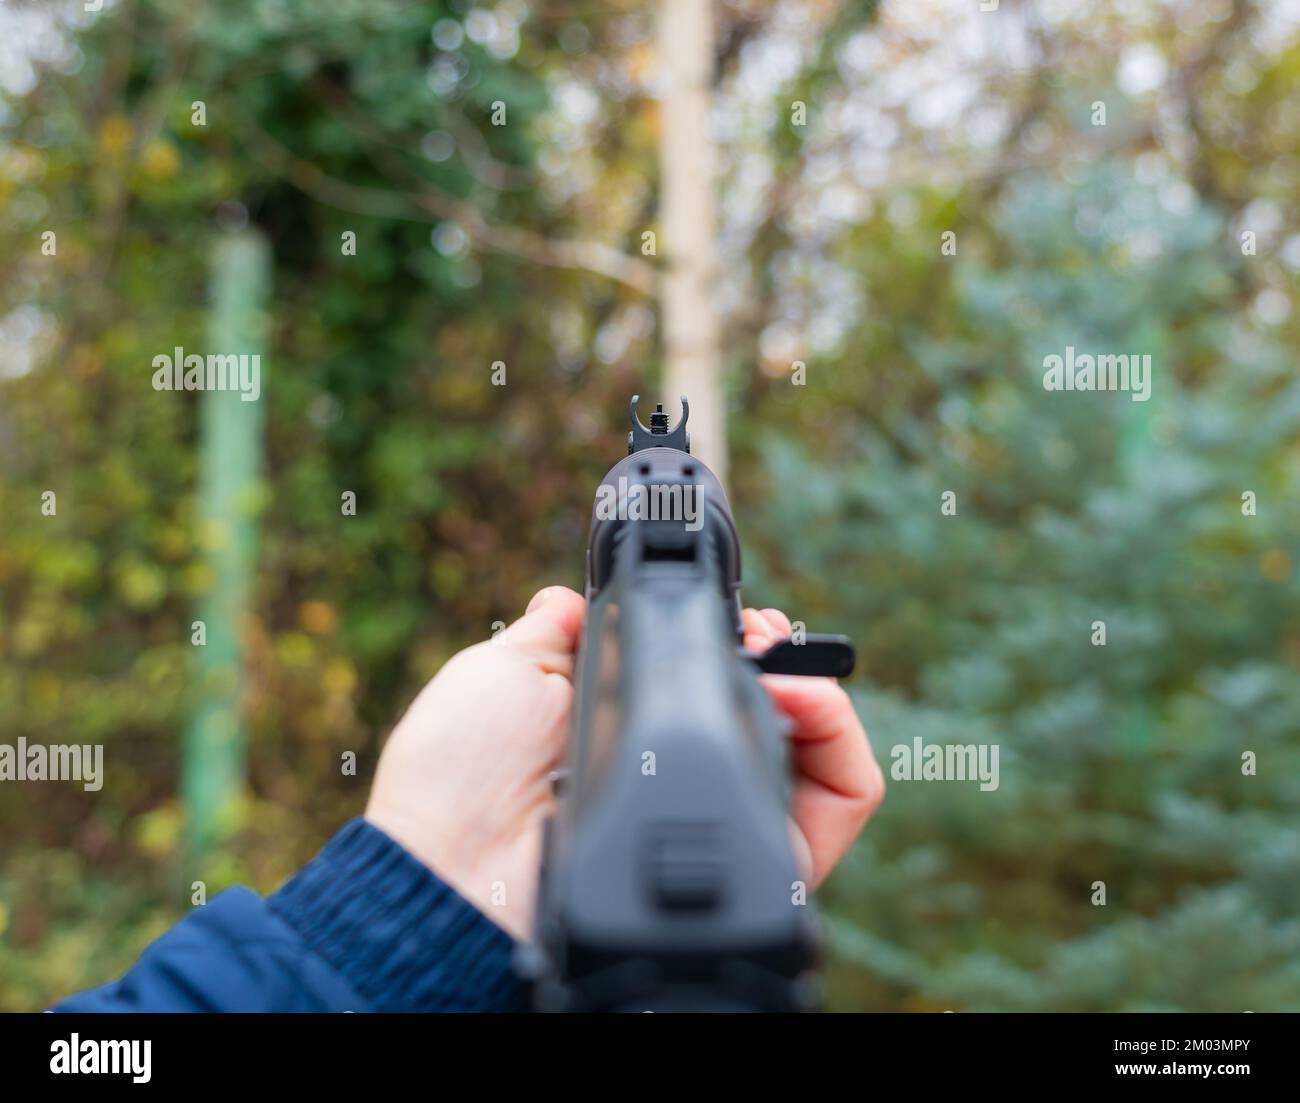 Hand holding Kalashnikov assault rifle first person view Stock Photo